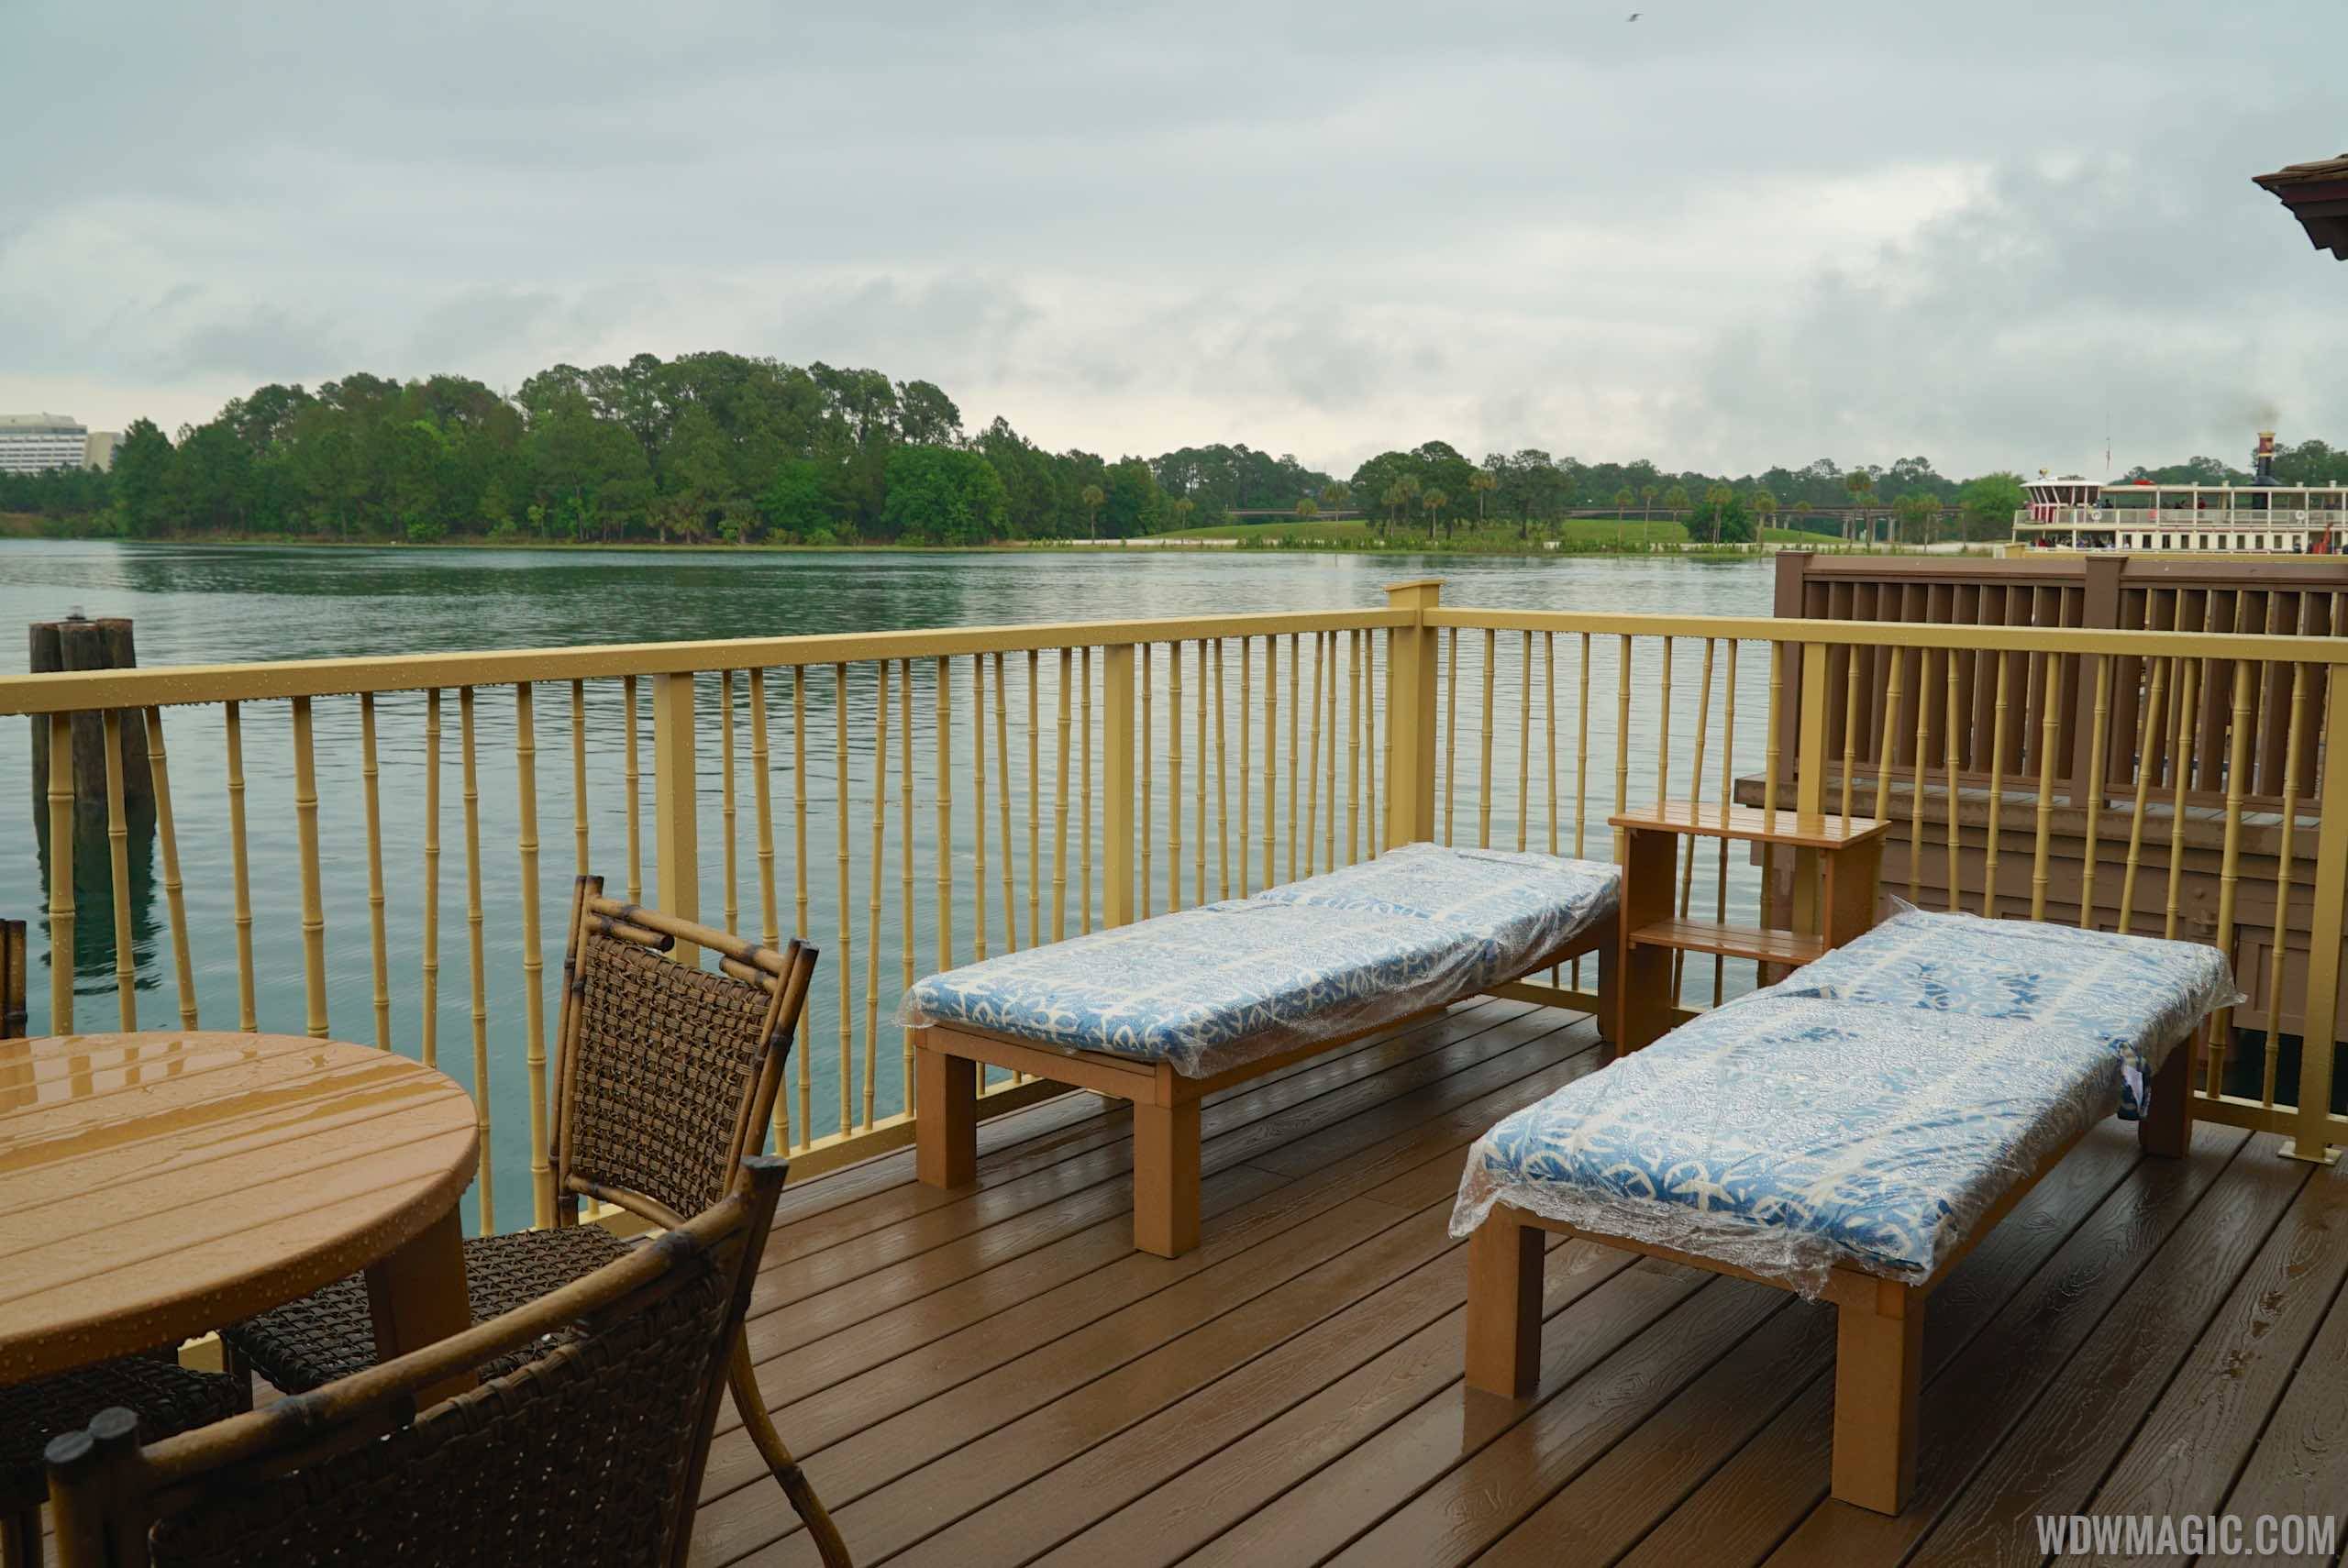 Disney's Polynesian Village Resort Bora Bora Bungalow - View from the deck